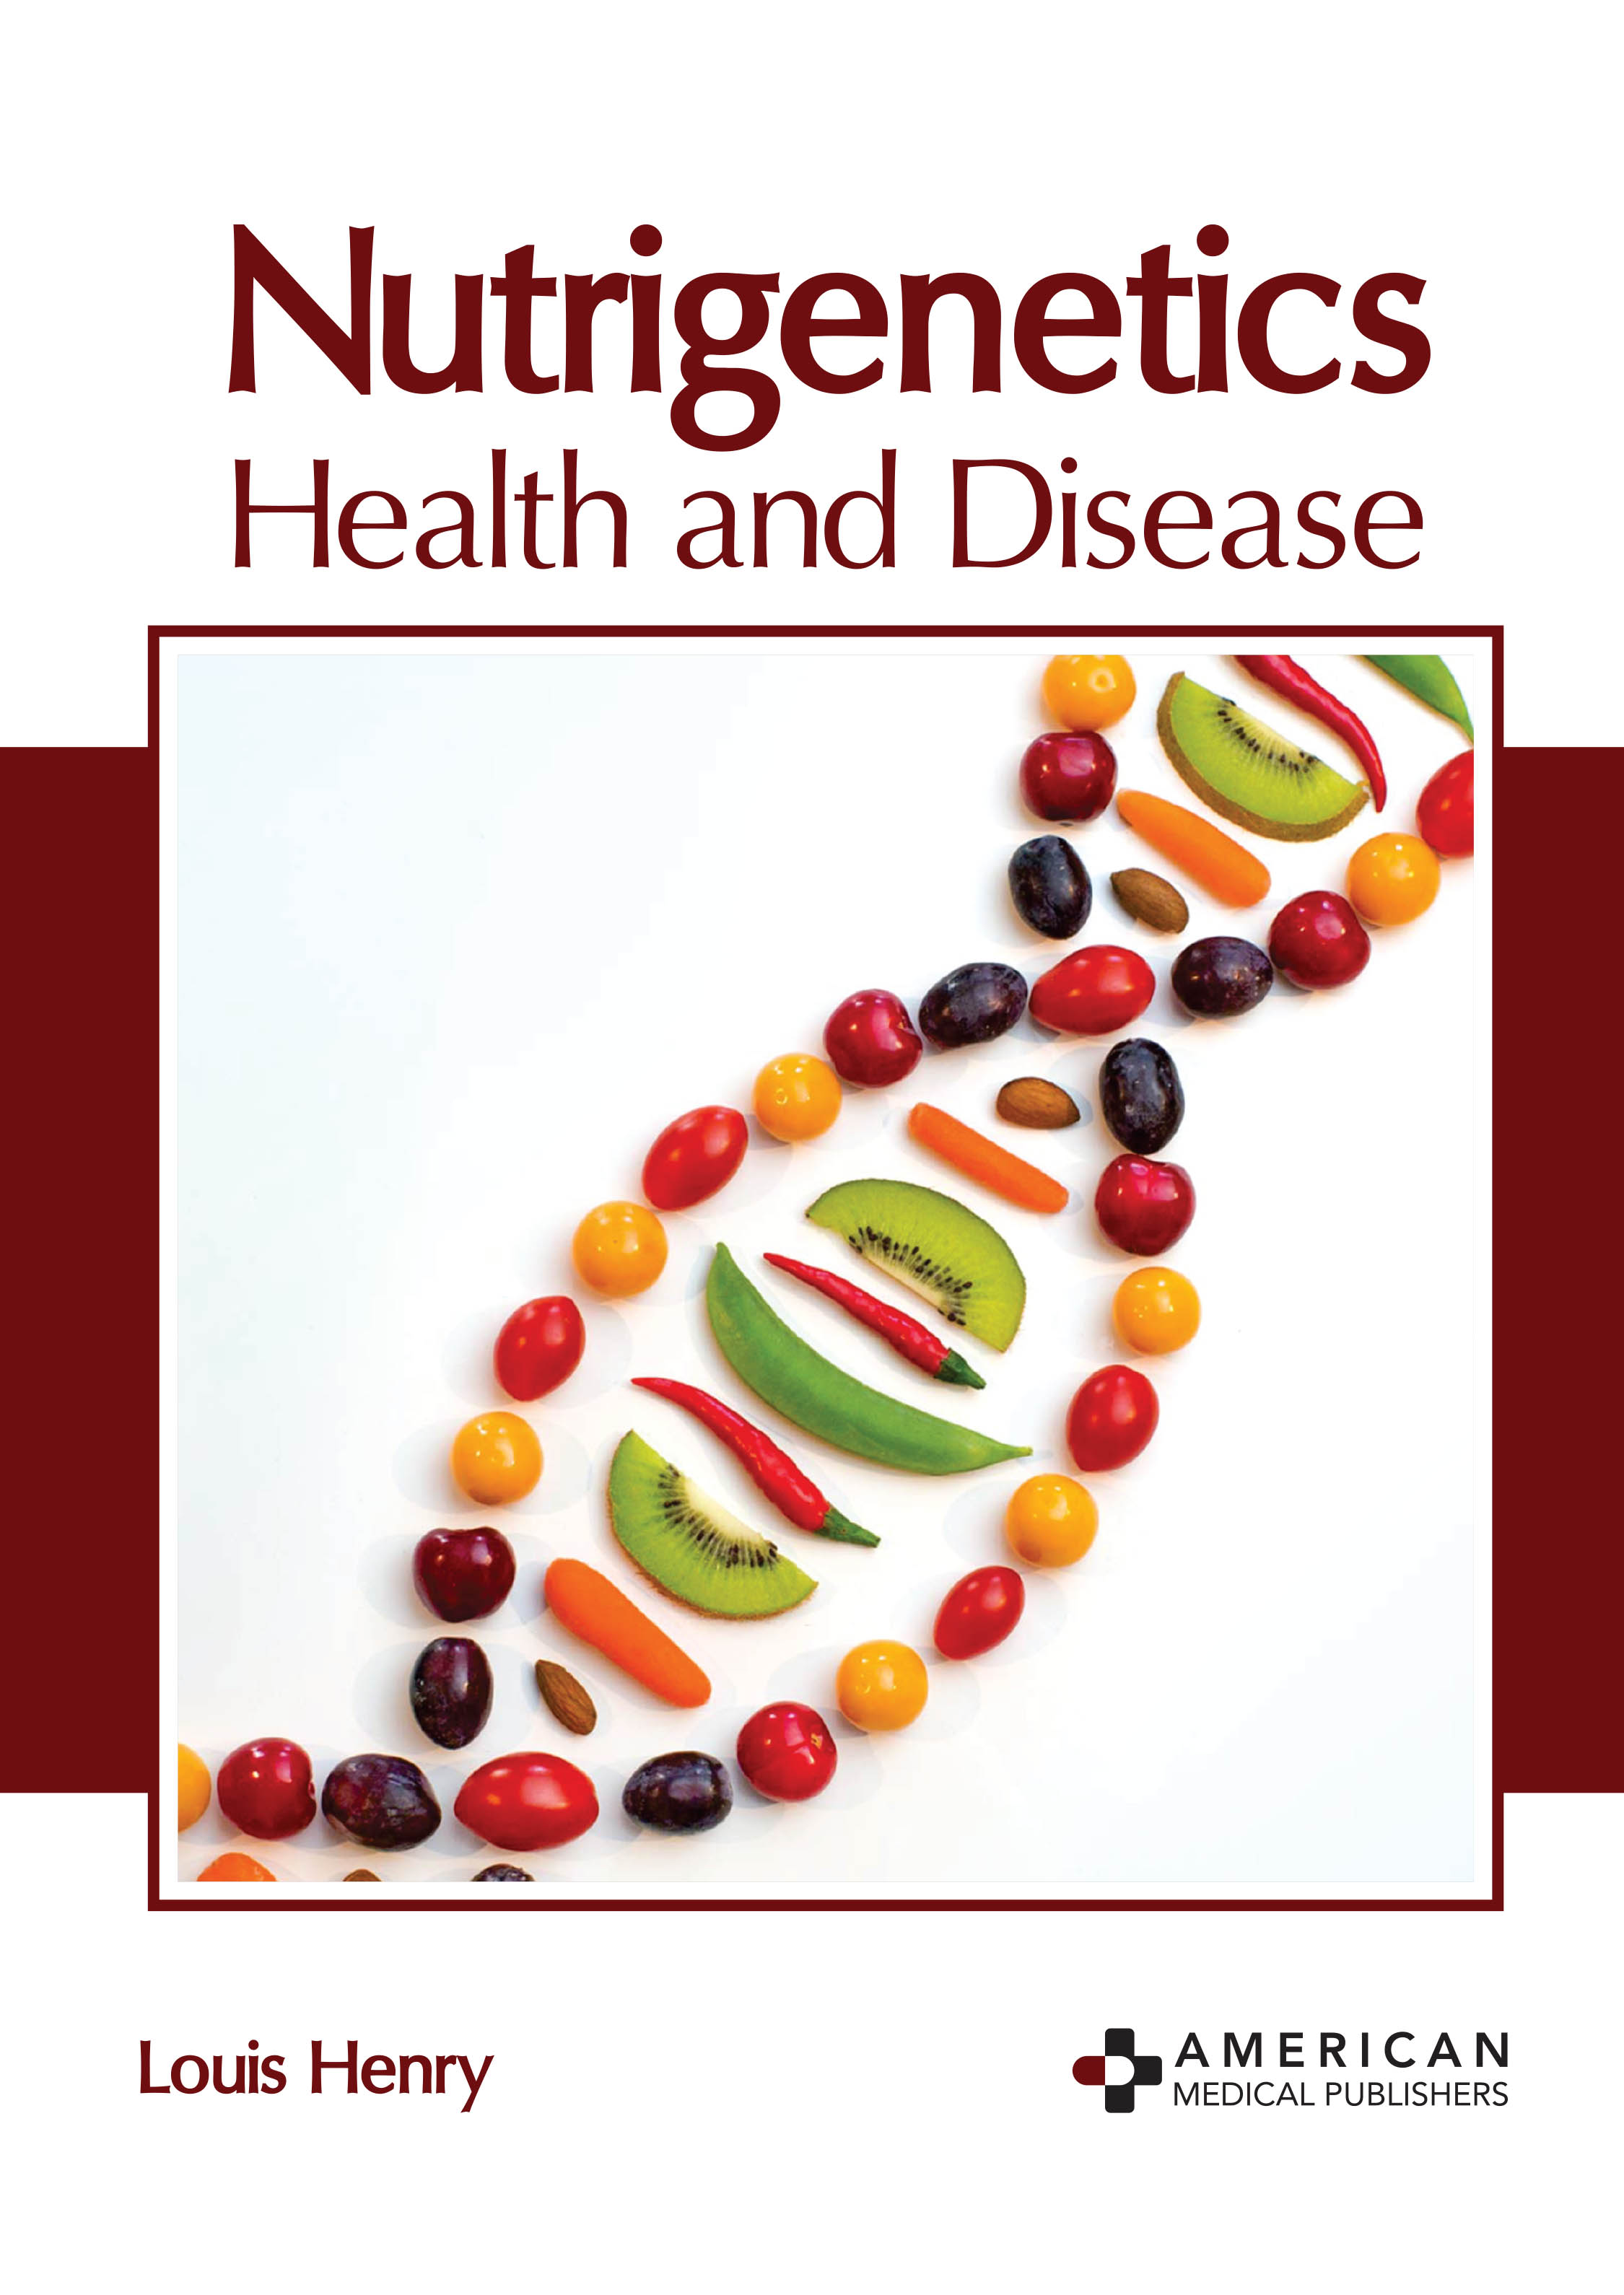 NUTRIGENETICS: HEALTH AND DISEASE